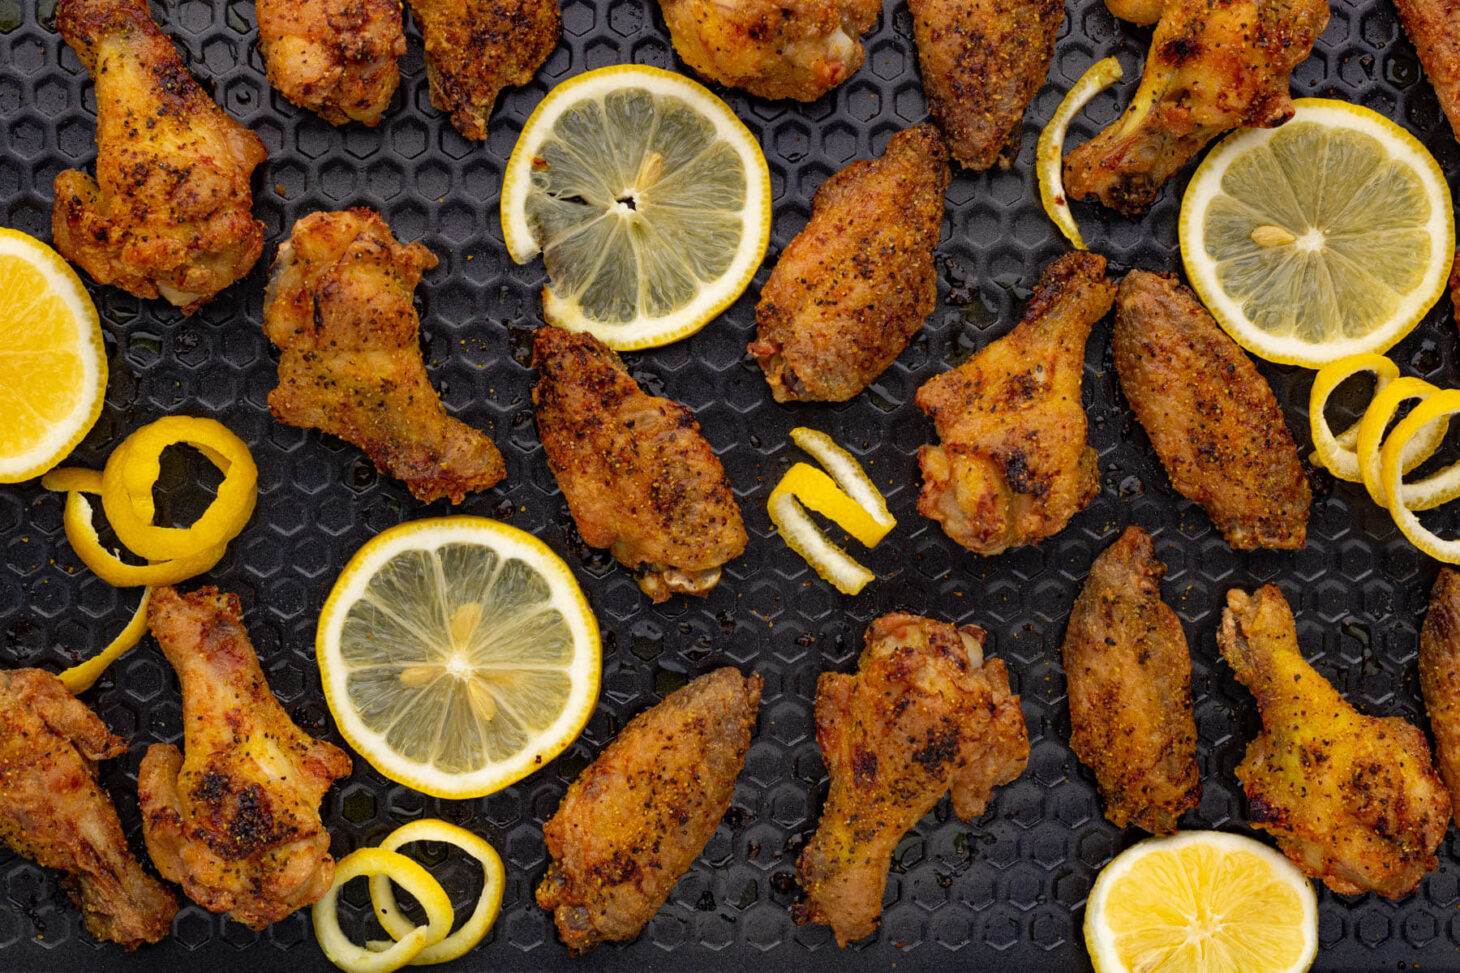 A baking sheet filled with crispy baked lemon pepper wings and lemon slices.